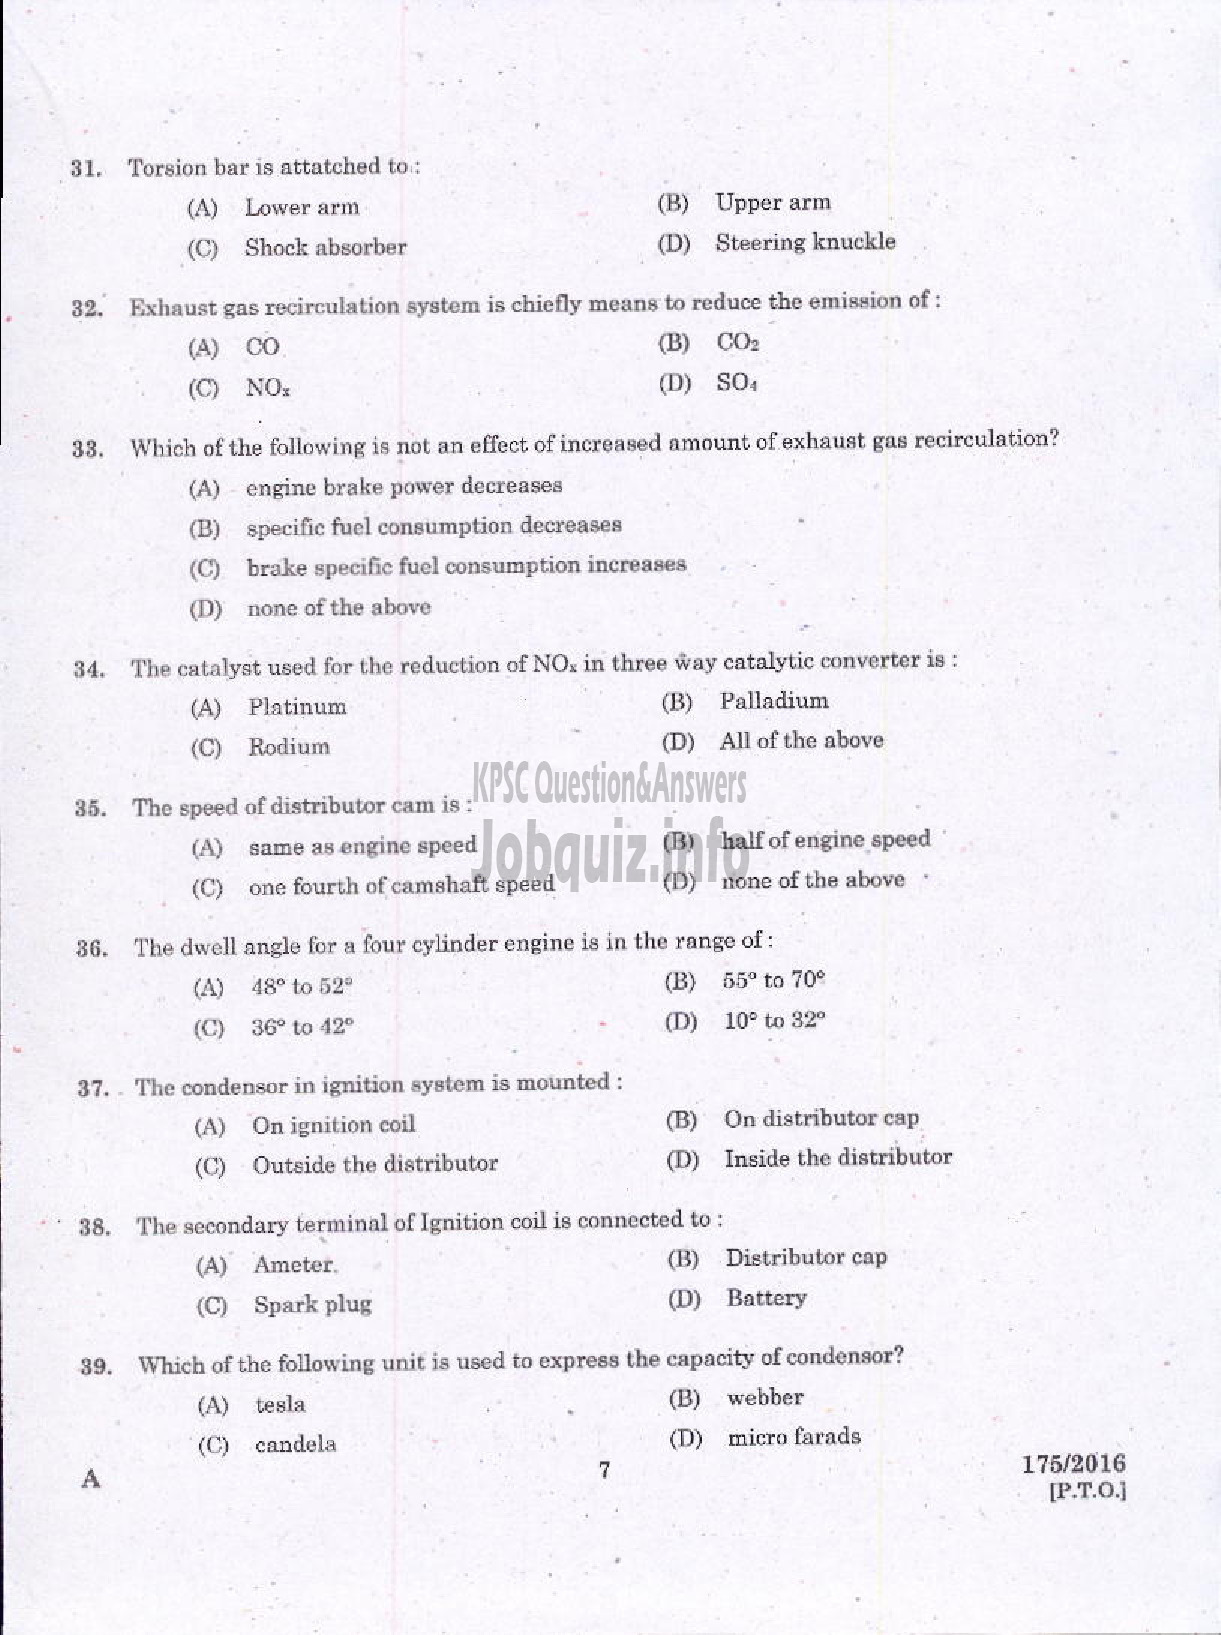 Kerala PSC Question Paper - TRADESMAN AUTOMOBILE MECHANIC TECHNICAL EDUCATION-5